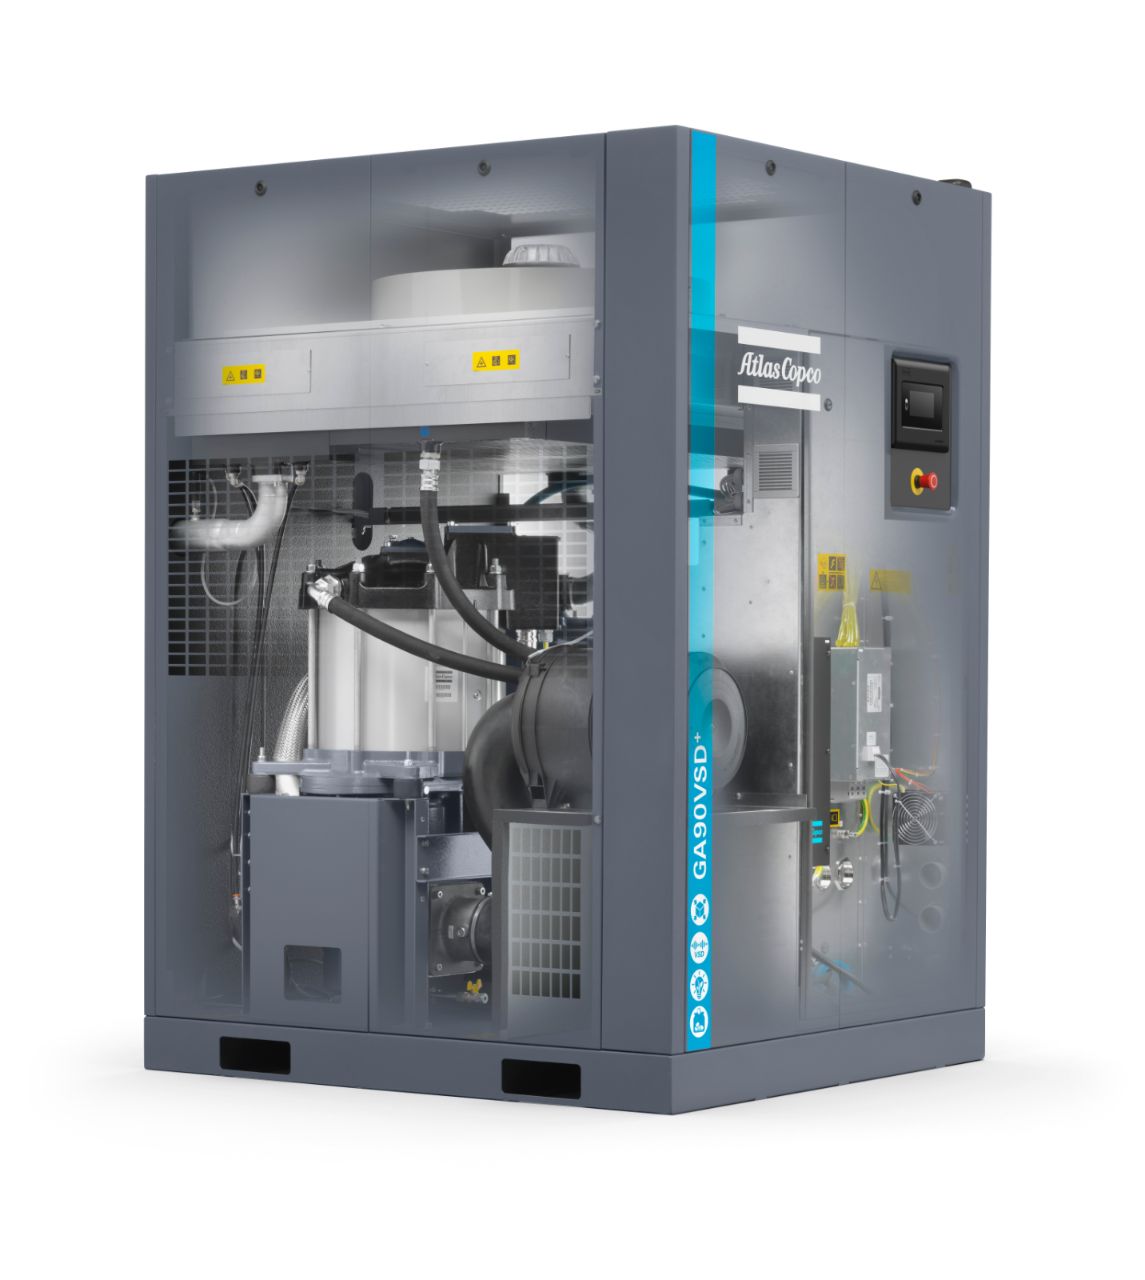 kompressor industriekompressor schraubenkompressor 75 kW drehzahlgeregelt förderfähig bafa werkstatt alt gegen neu